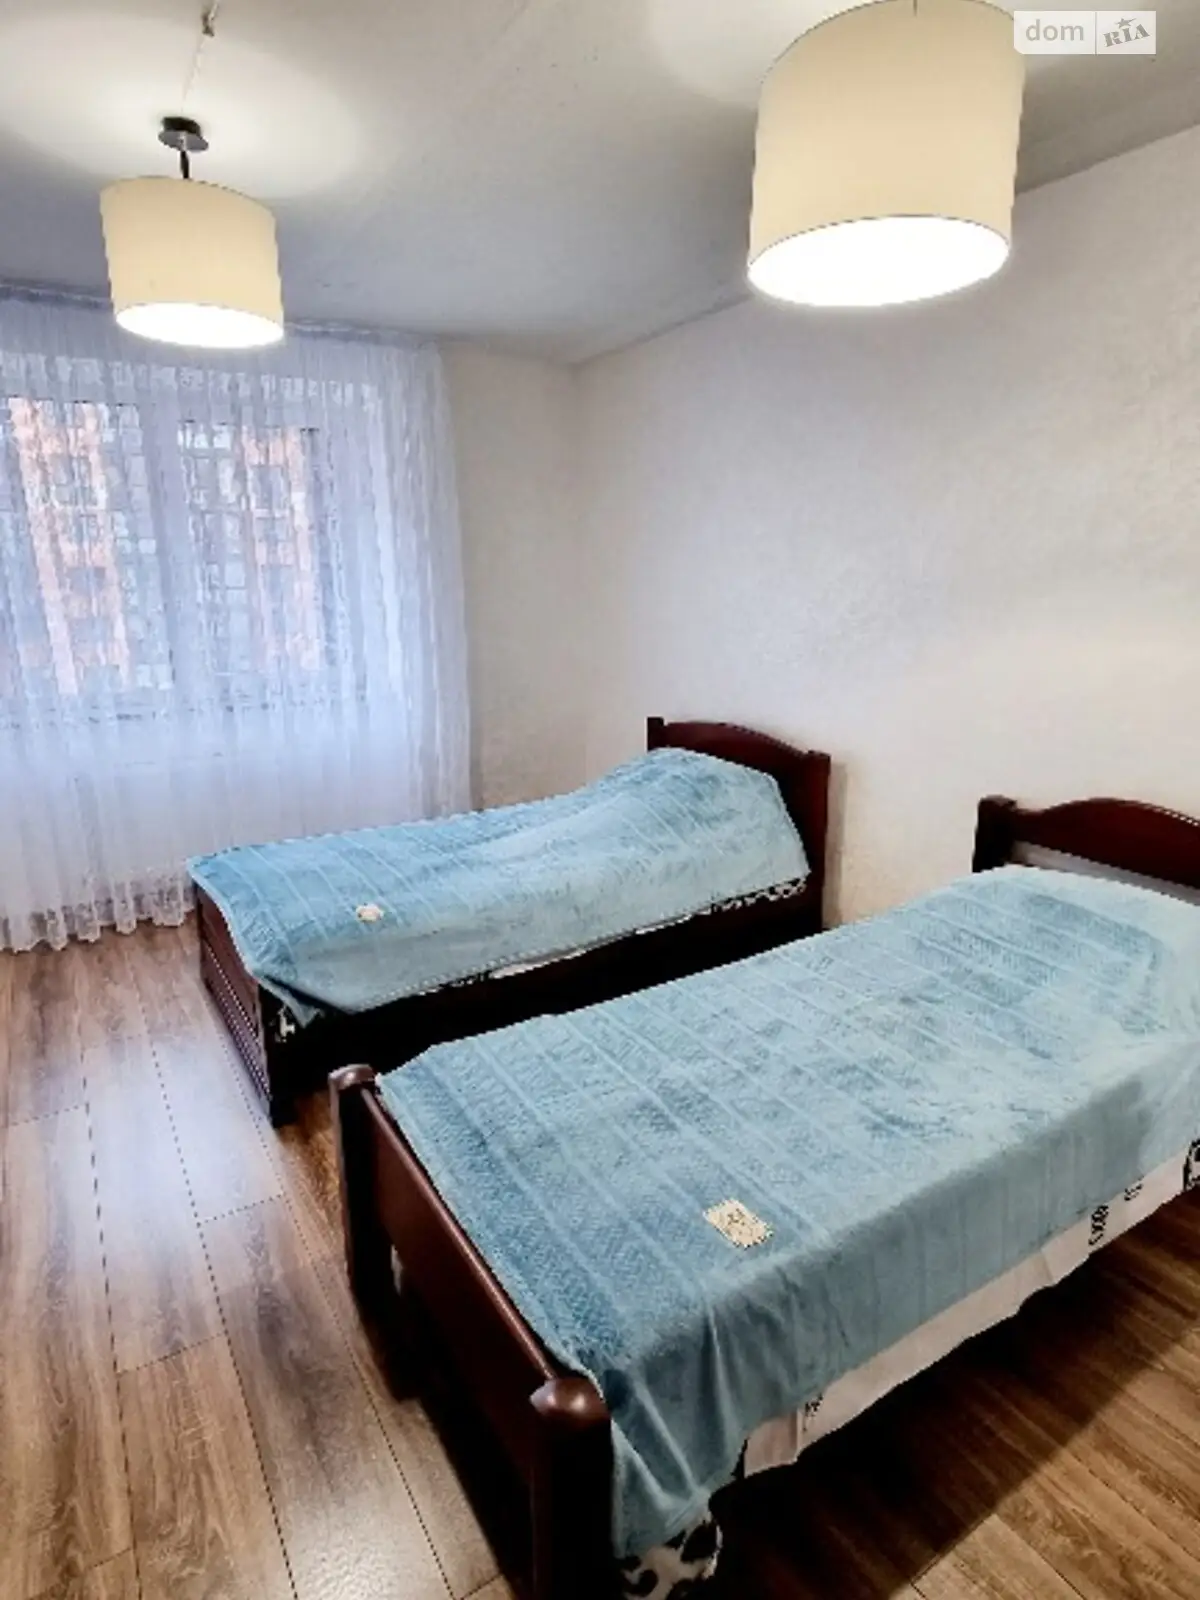 2-кімнатна квартира у Луцьку - фото 2